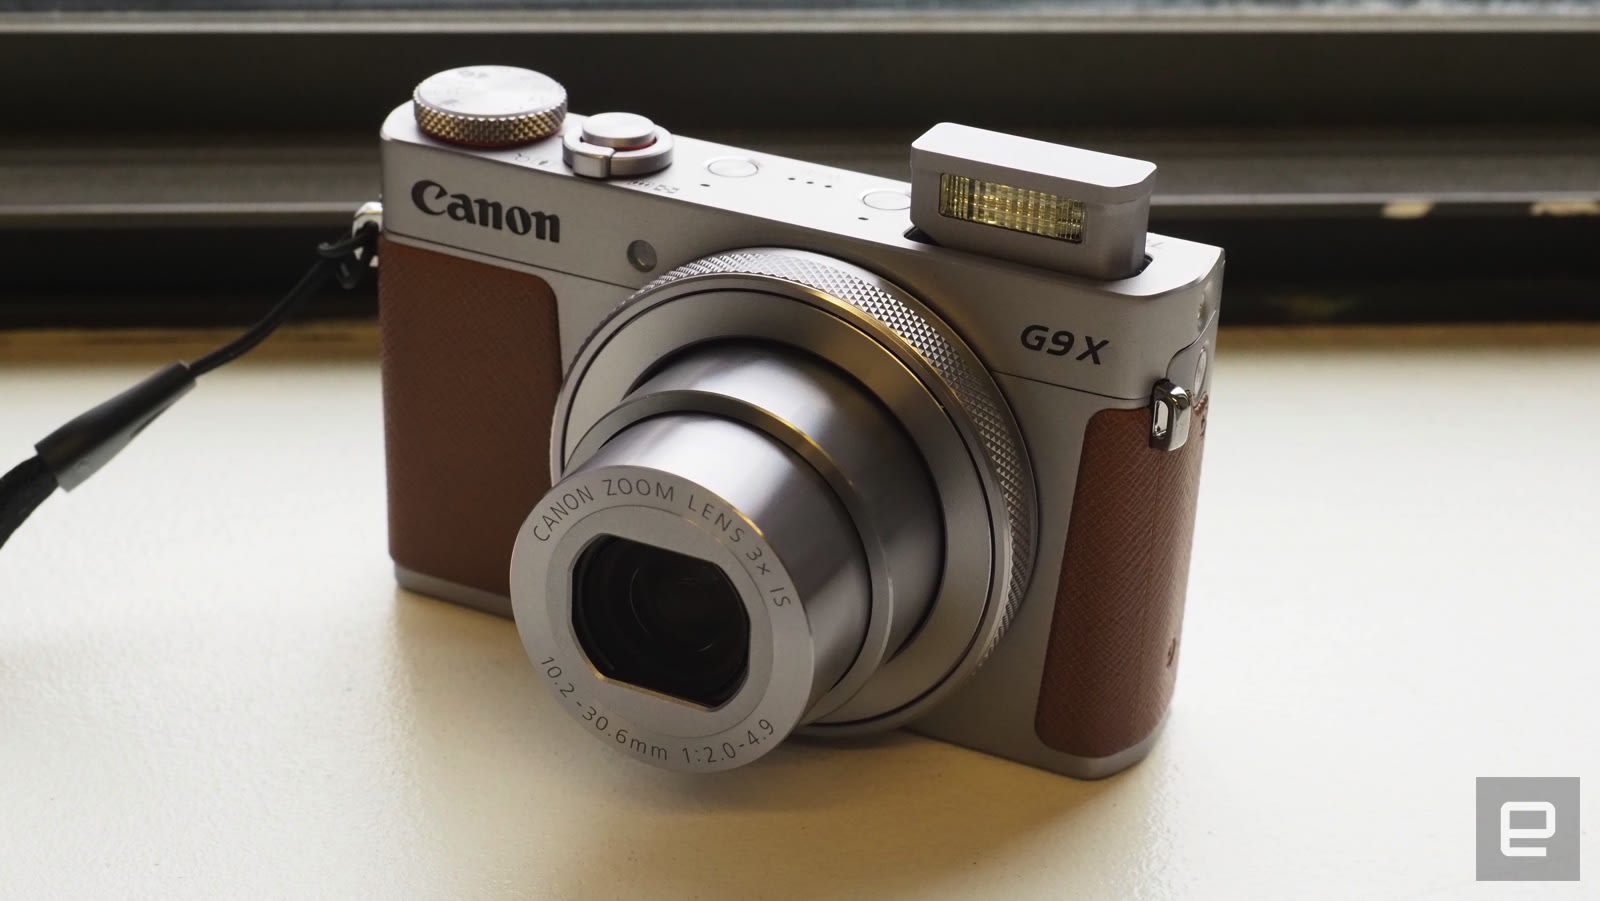 Canon G9X Mark II compact camera